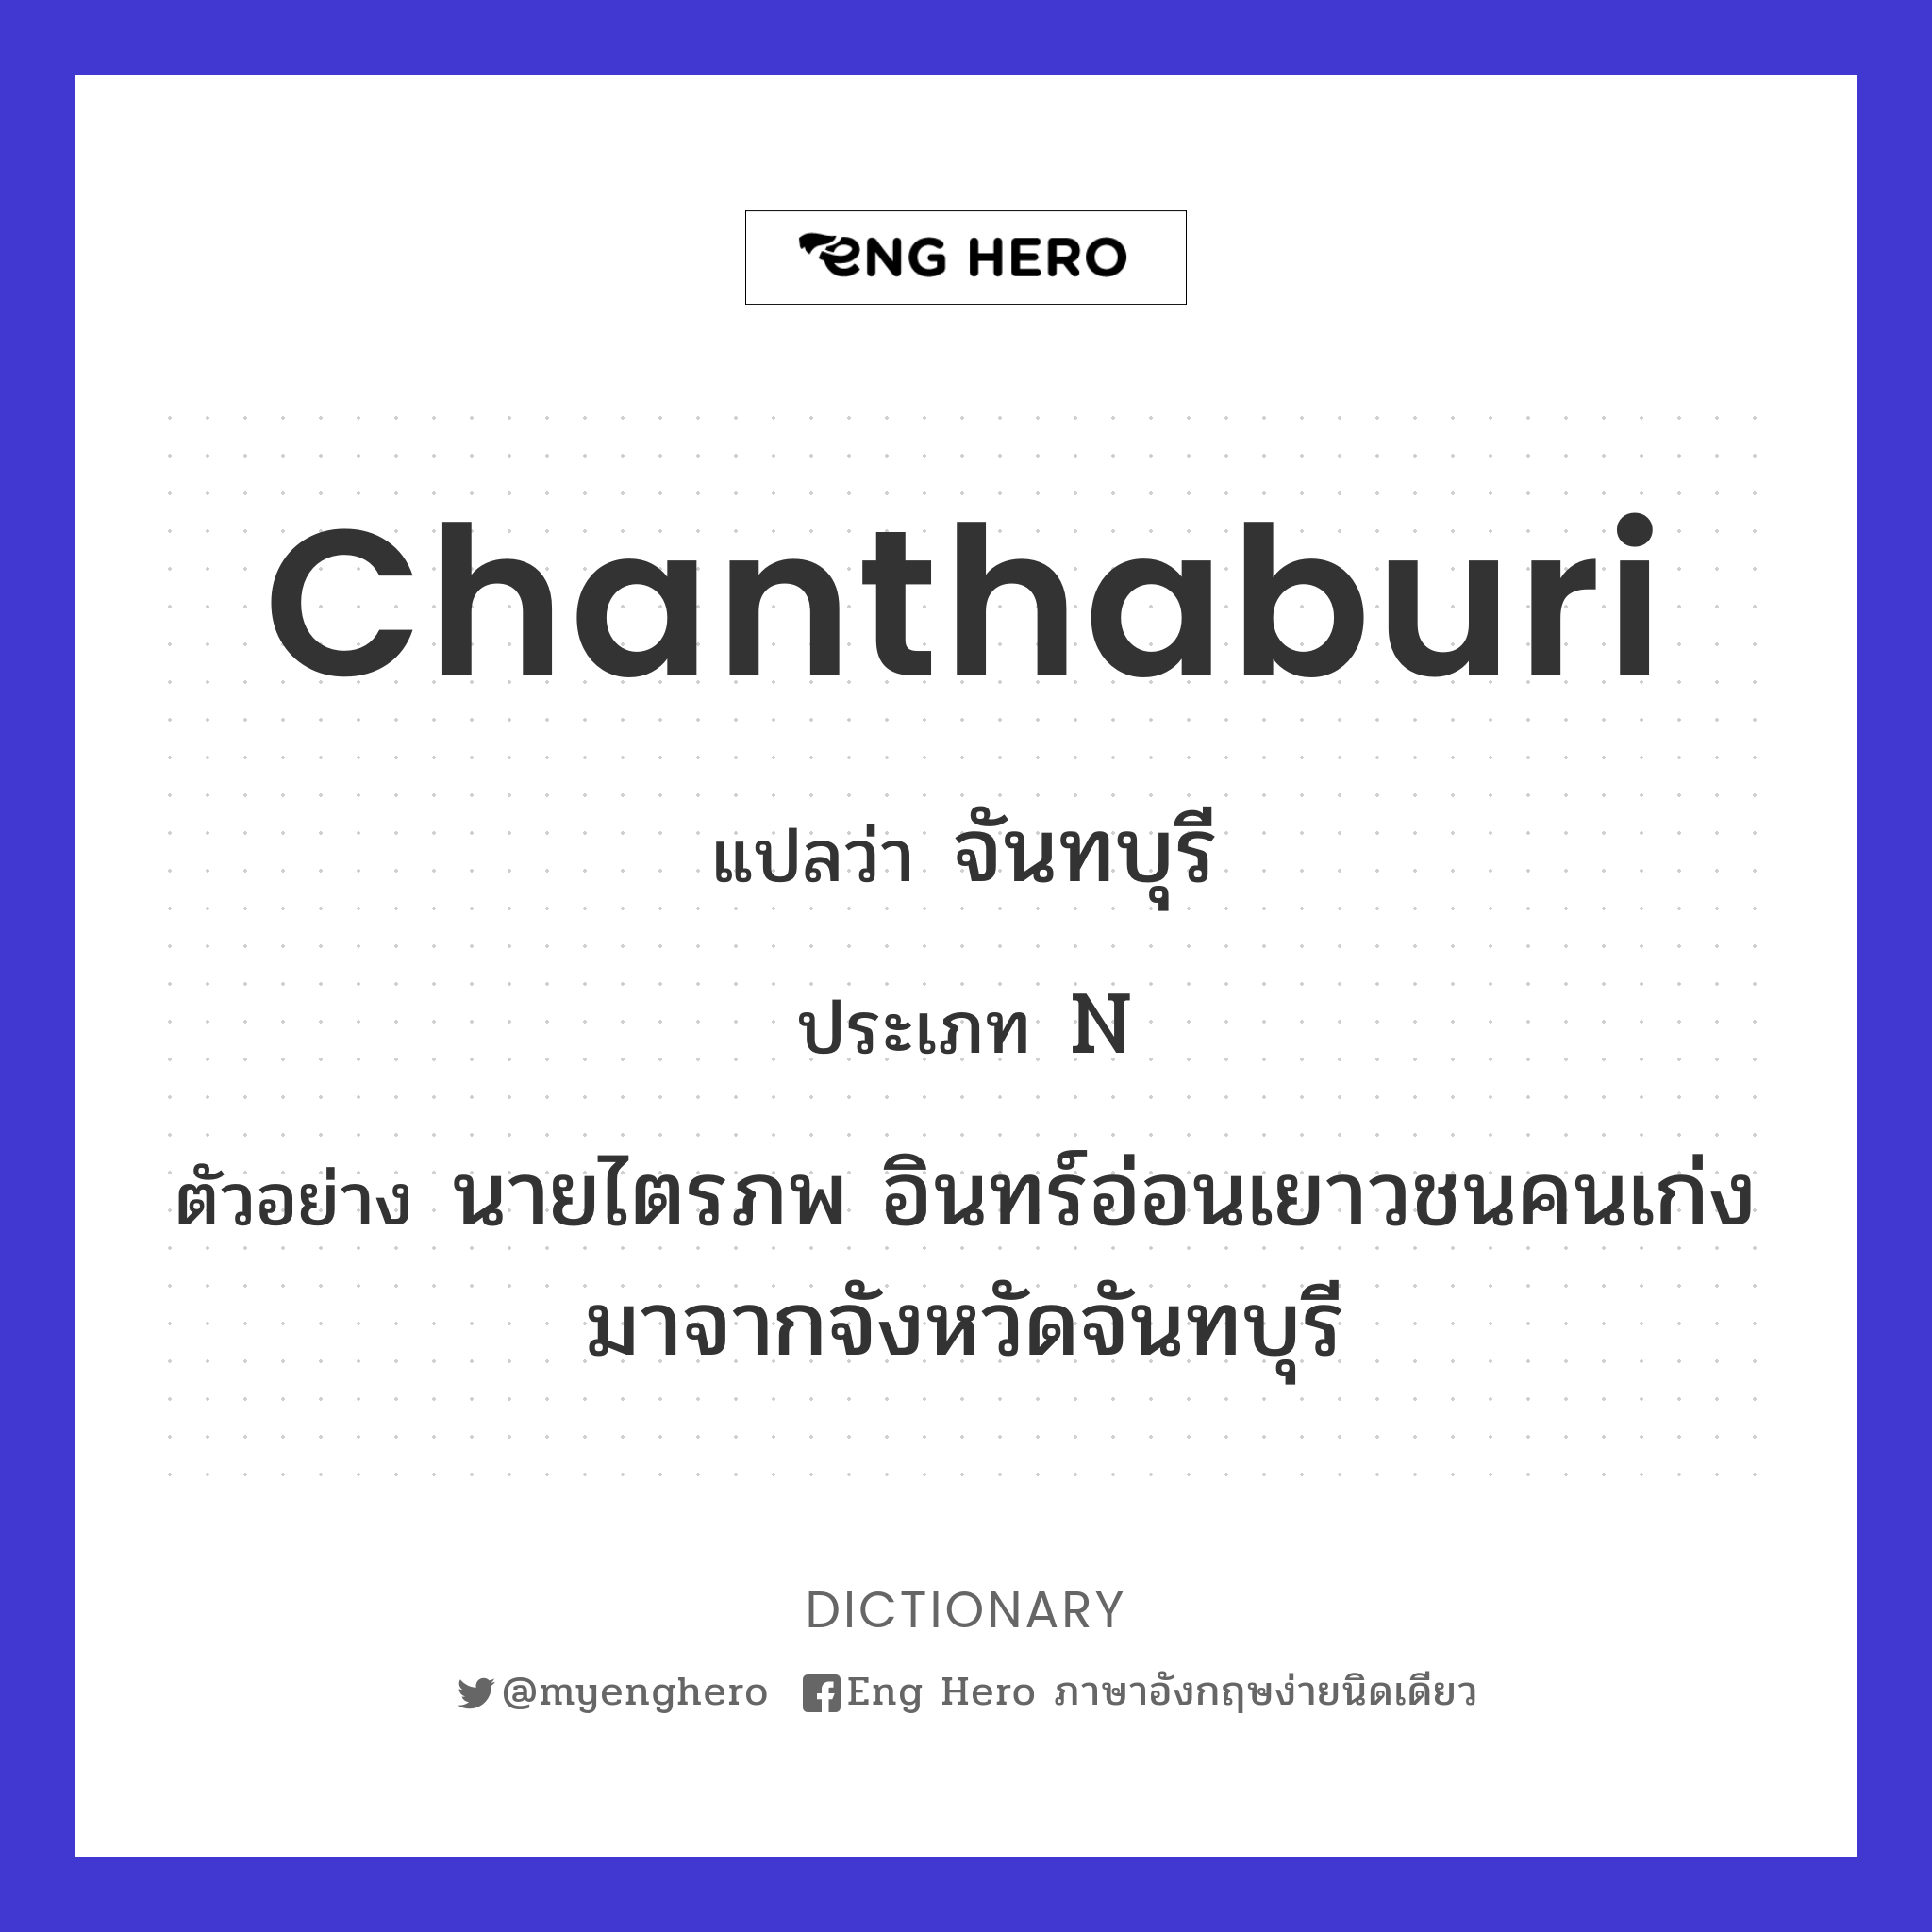 Chanthaburi